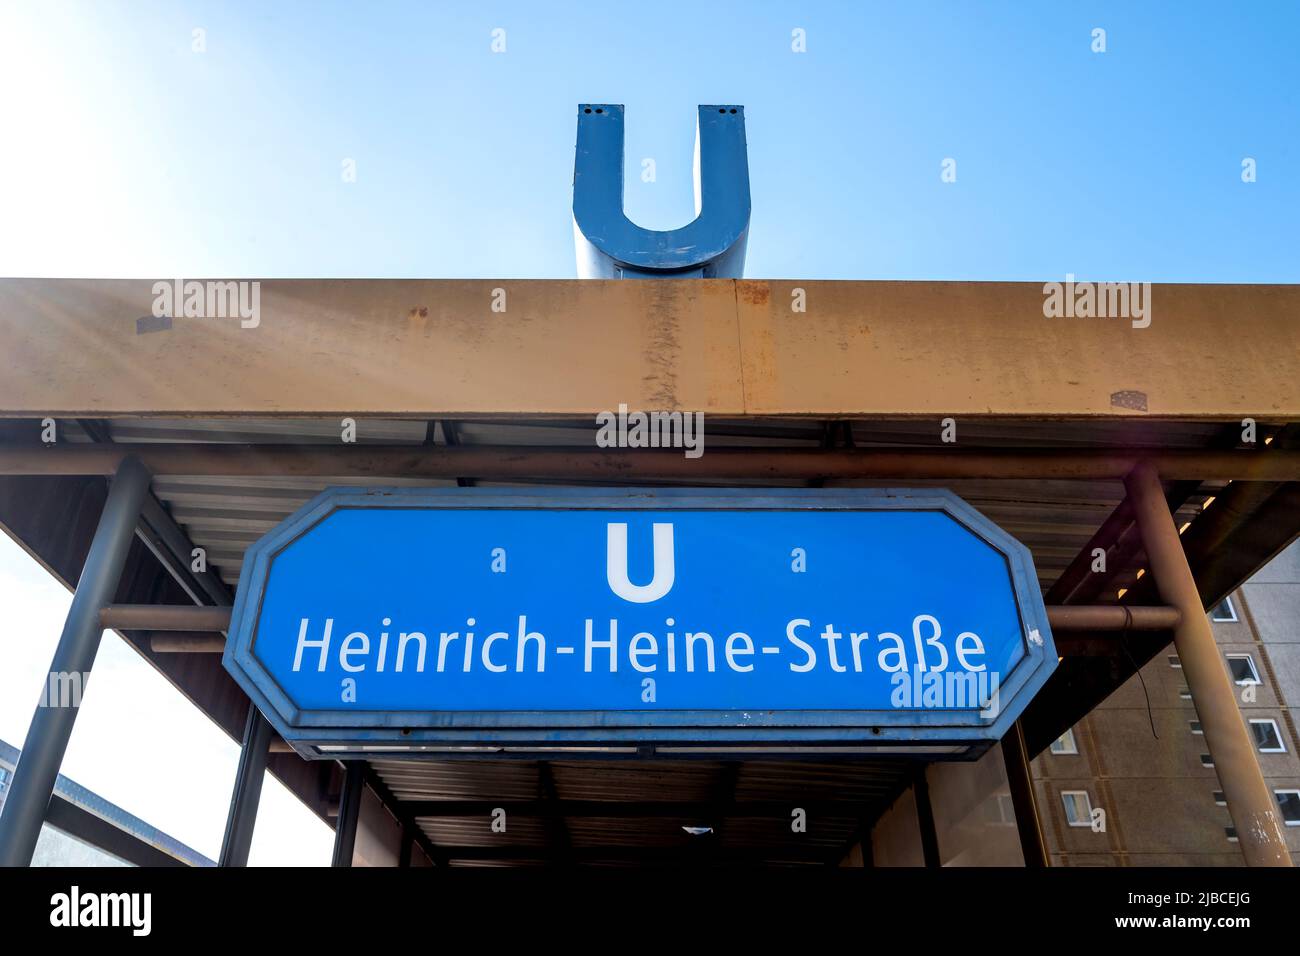 Heinrich heine strasse u bahn station hi-res stock photography and images -  Alamy